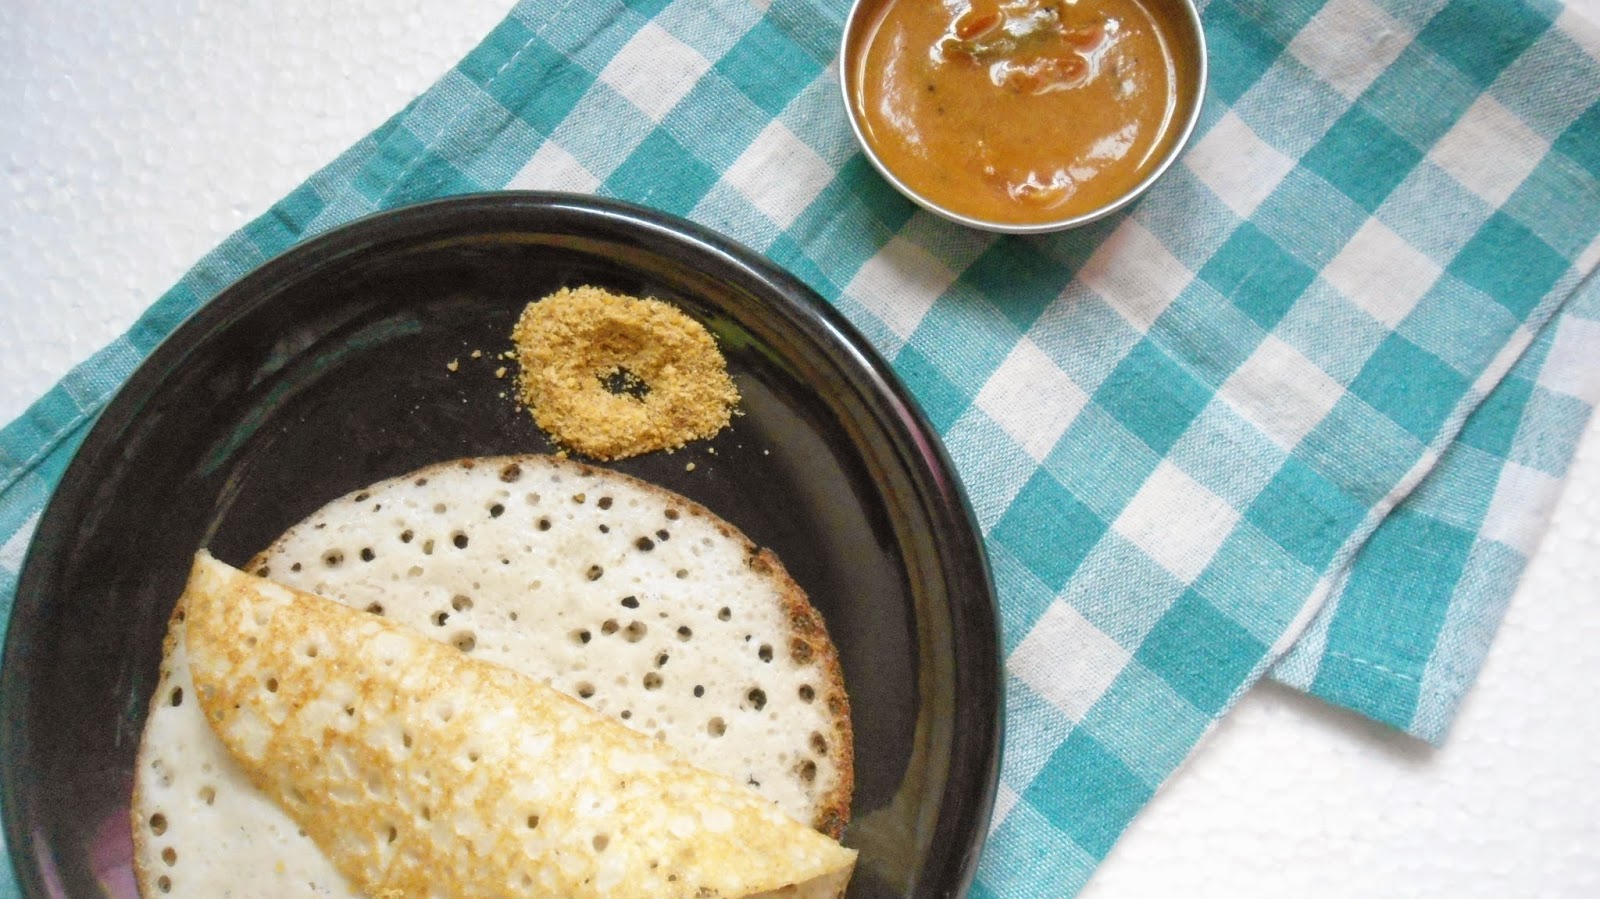 Vendhayam / Fenugreek  Dosa | Indian Breakfast Recipe